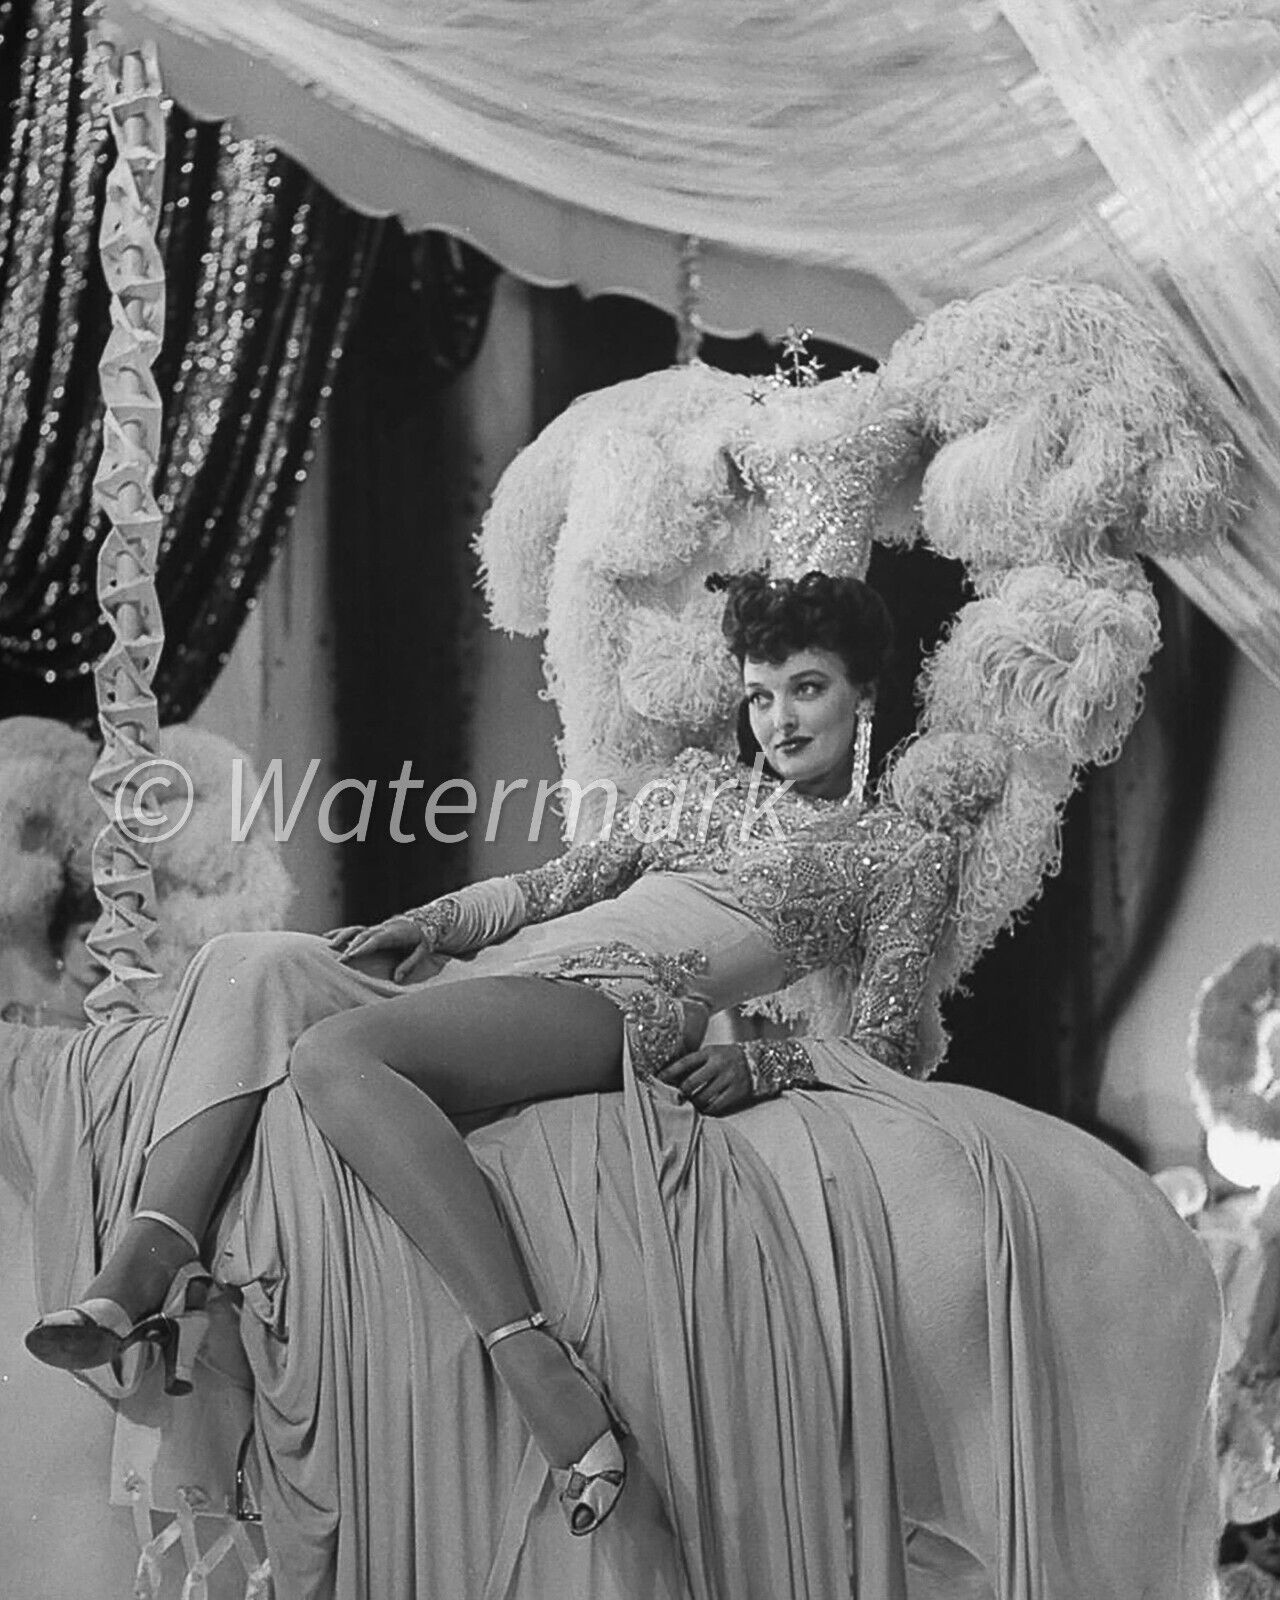 8X10 PUBLICITY PHOTO 1910s - 1920s Ziegfeld Follies dancer Girl Vintage